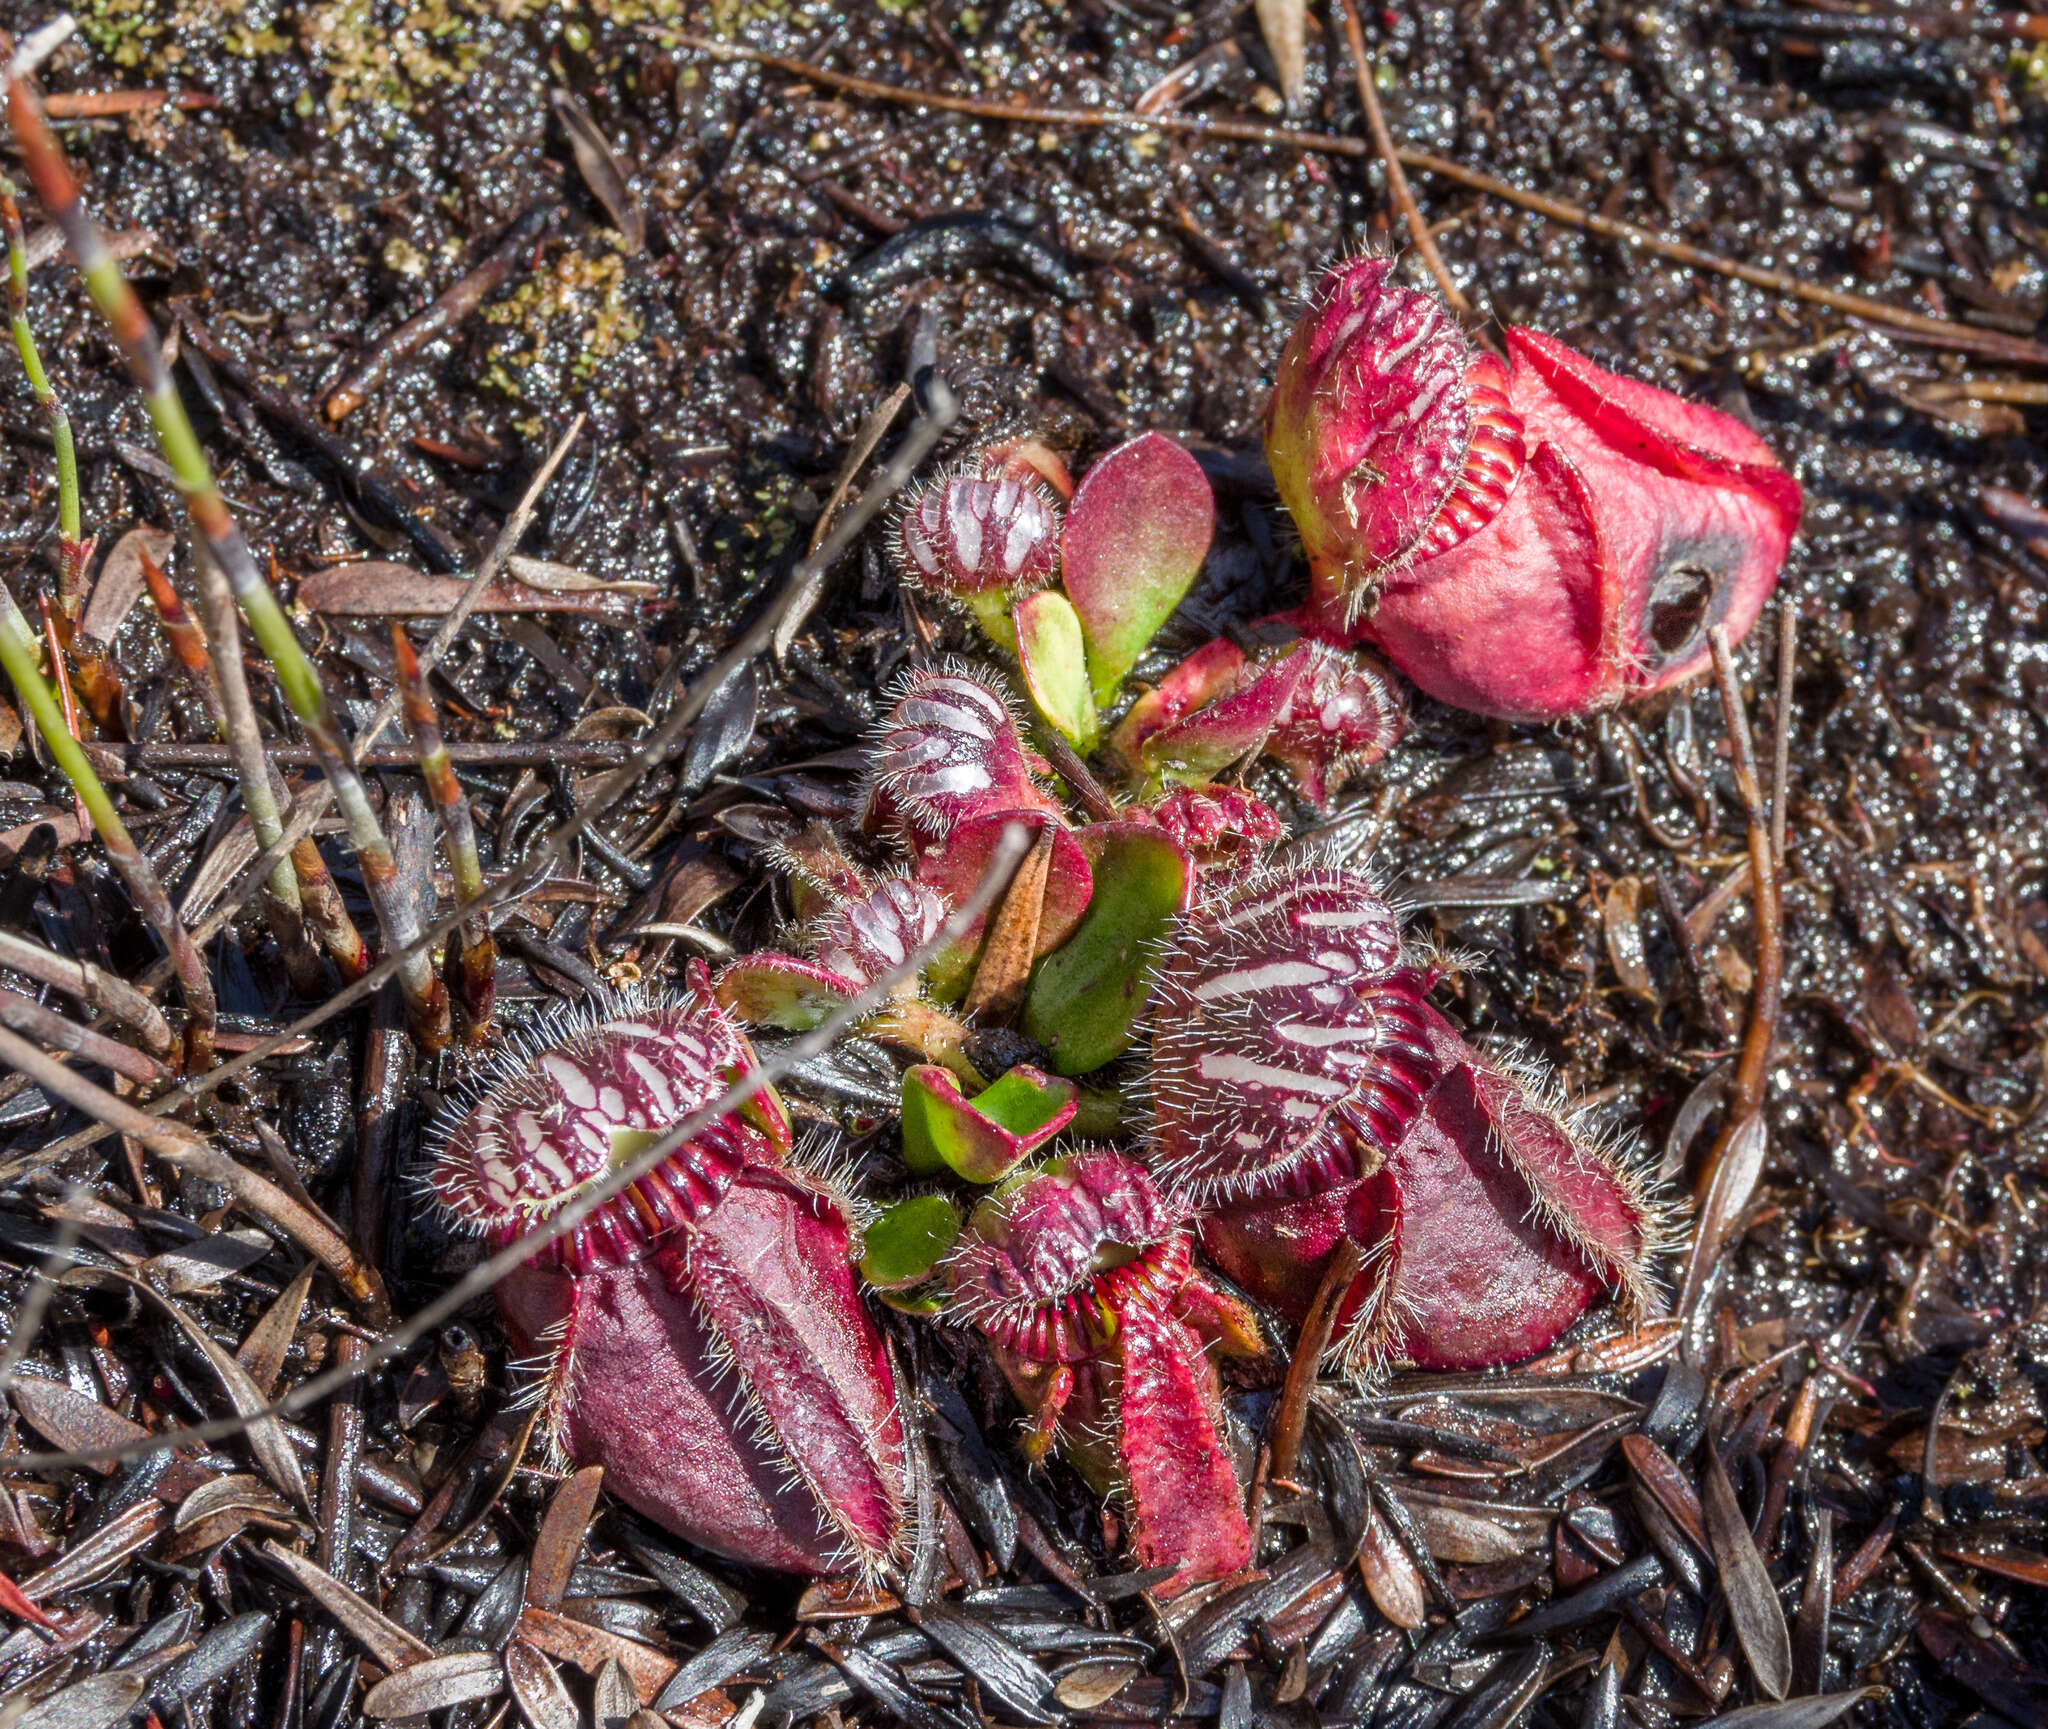 Image of Albany pitcher plant, Australian pitcher plant